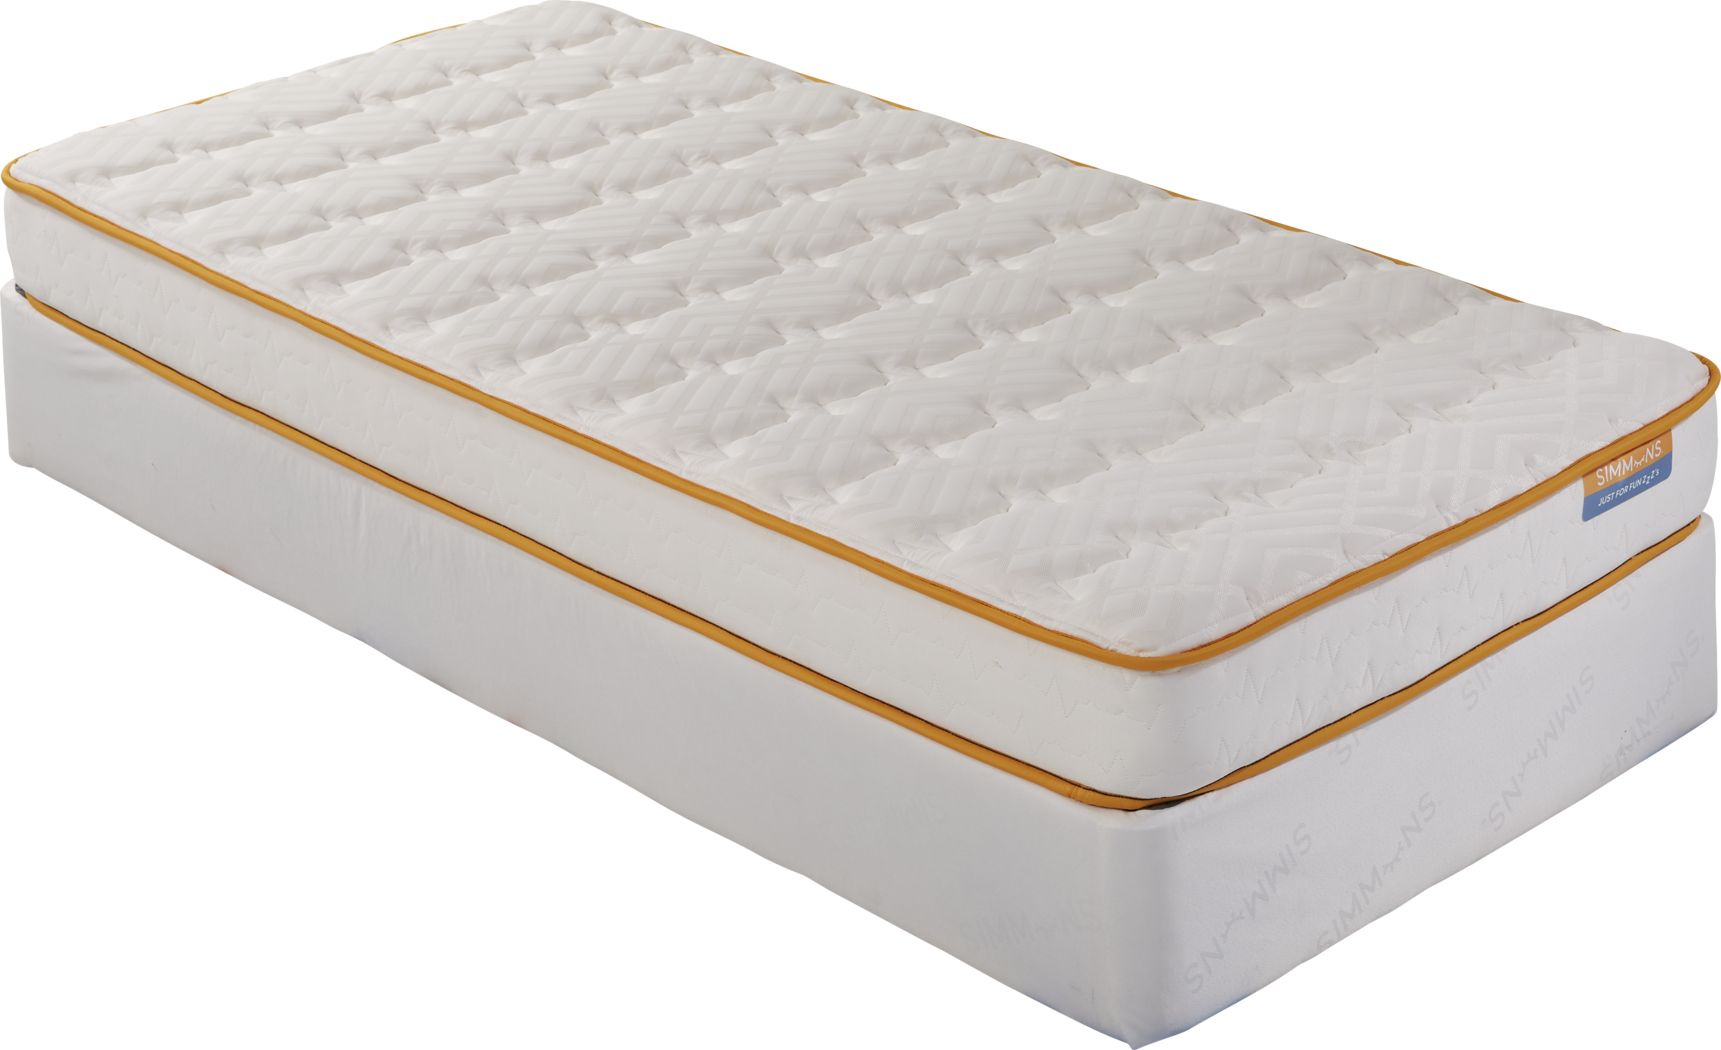 simmons twin mattress dimensions